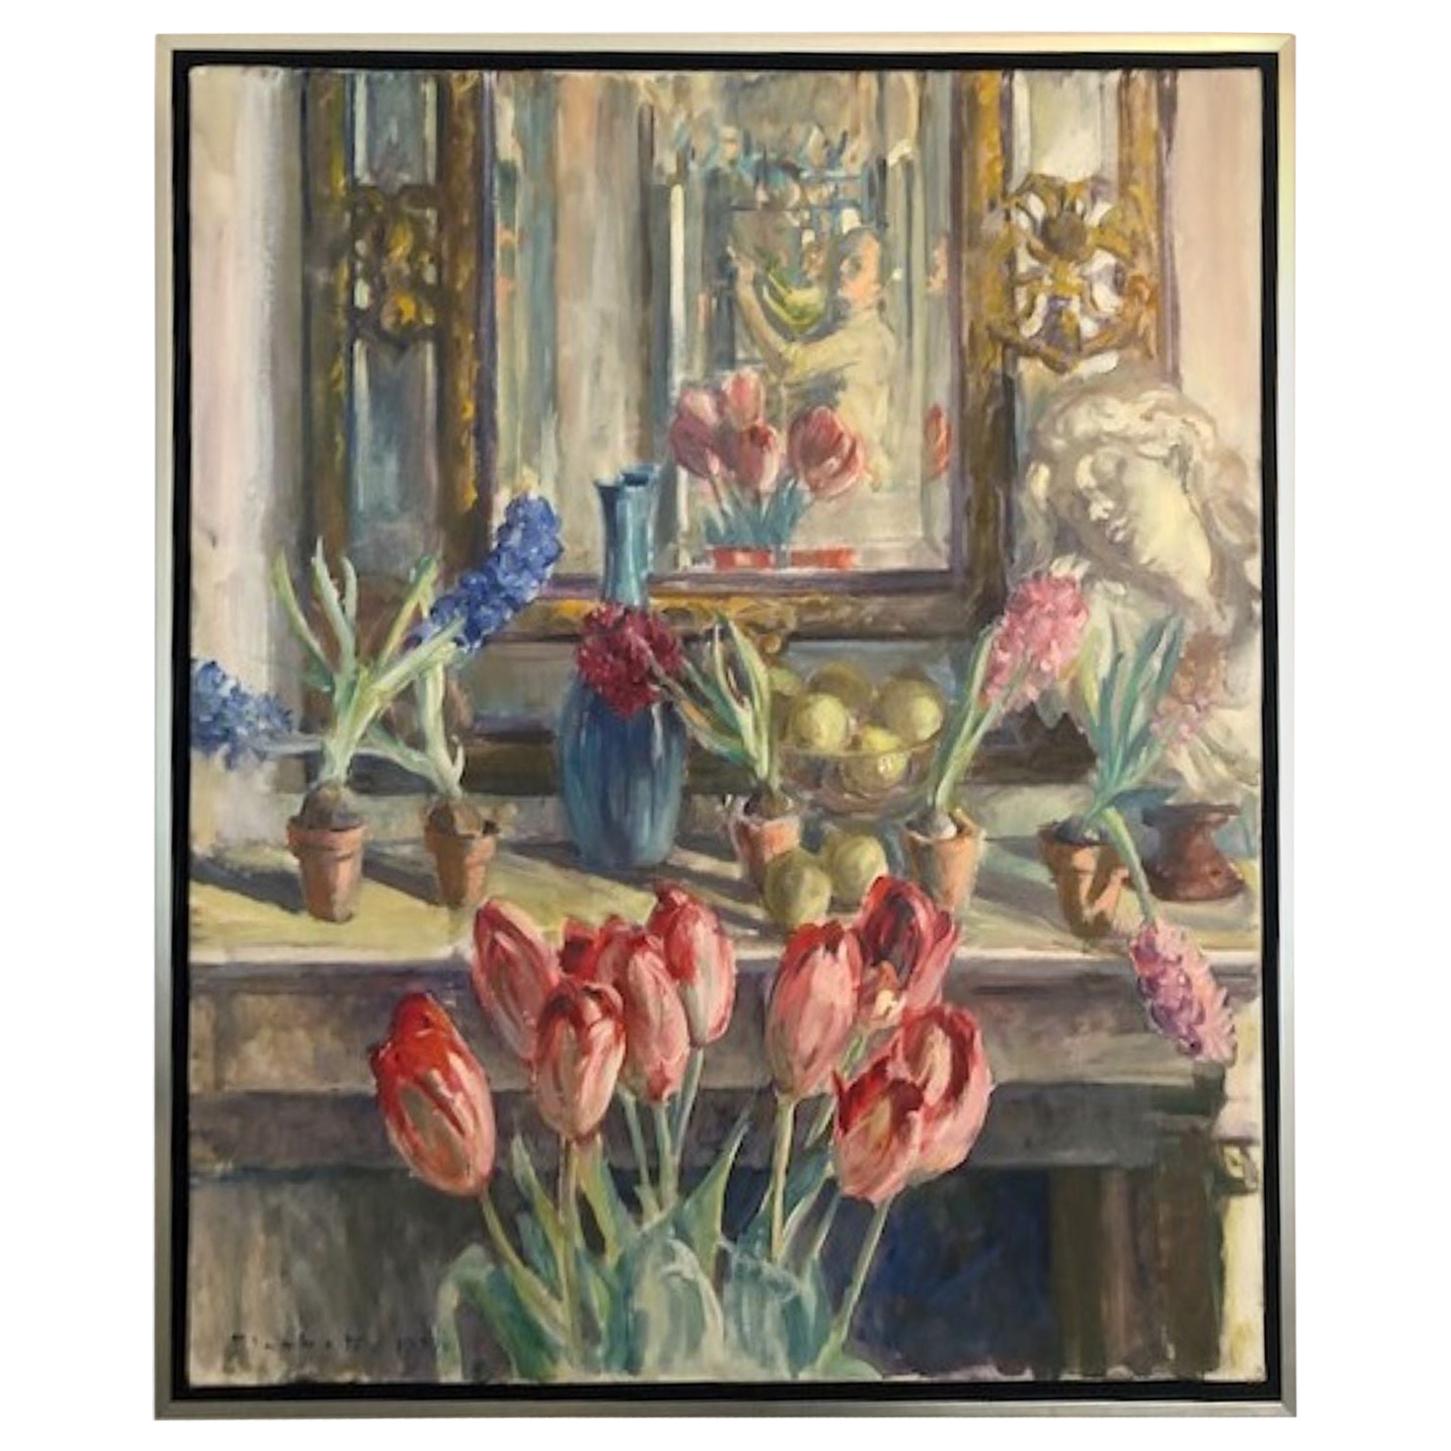 Joseph 'Joe' Plaskett Artist's Studio Oil on Canvas Still Life Flowers Painting